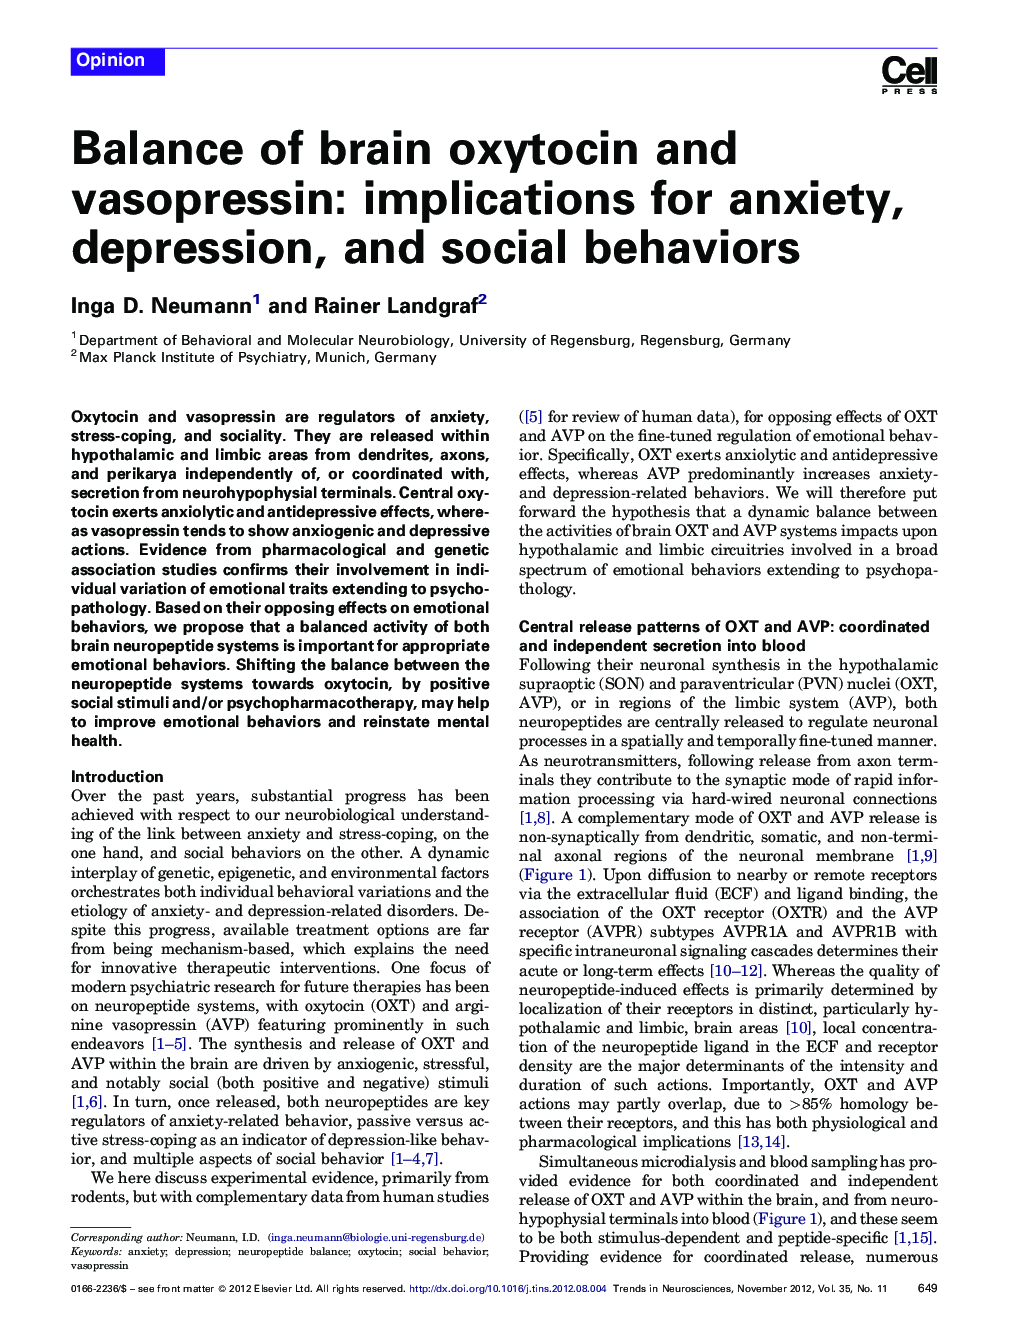 Balance of brain oxytocin and vasopressin: implications for anxiety, depression, and social behaviors